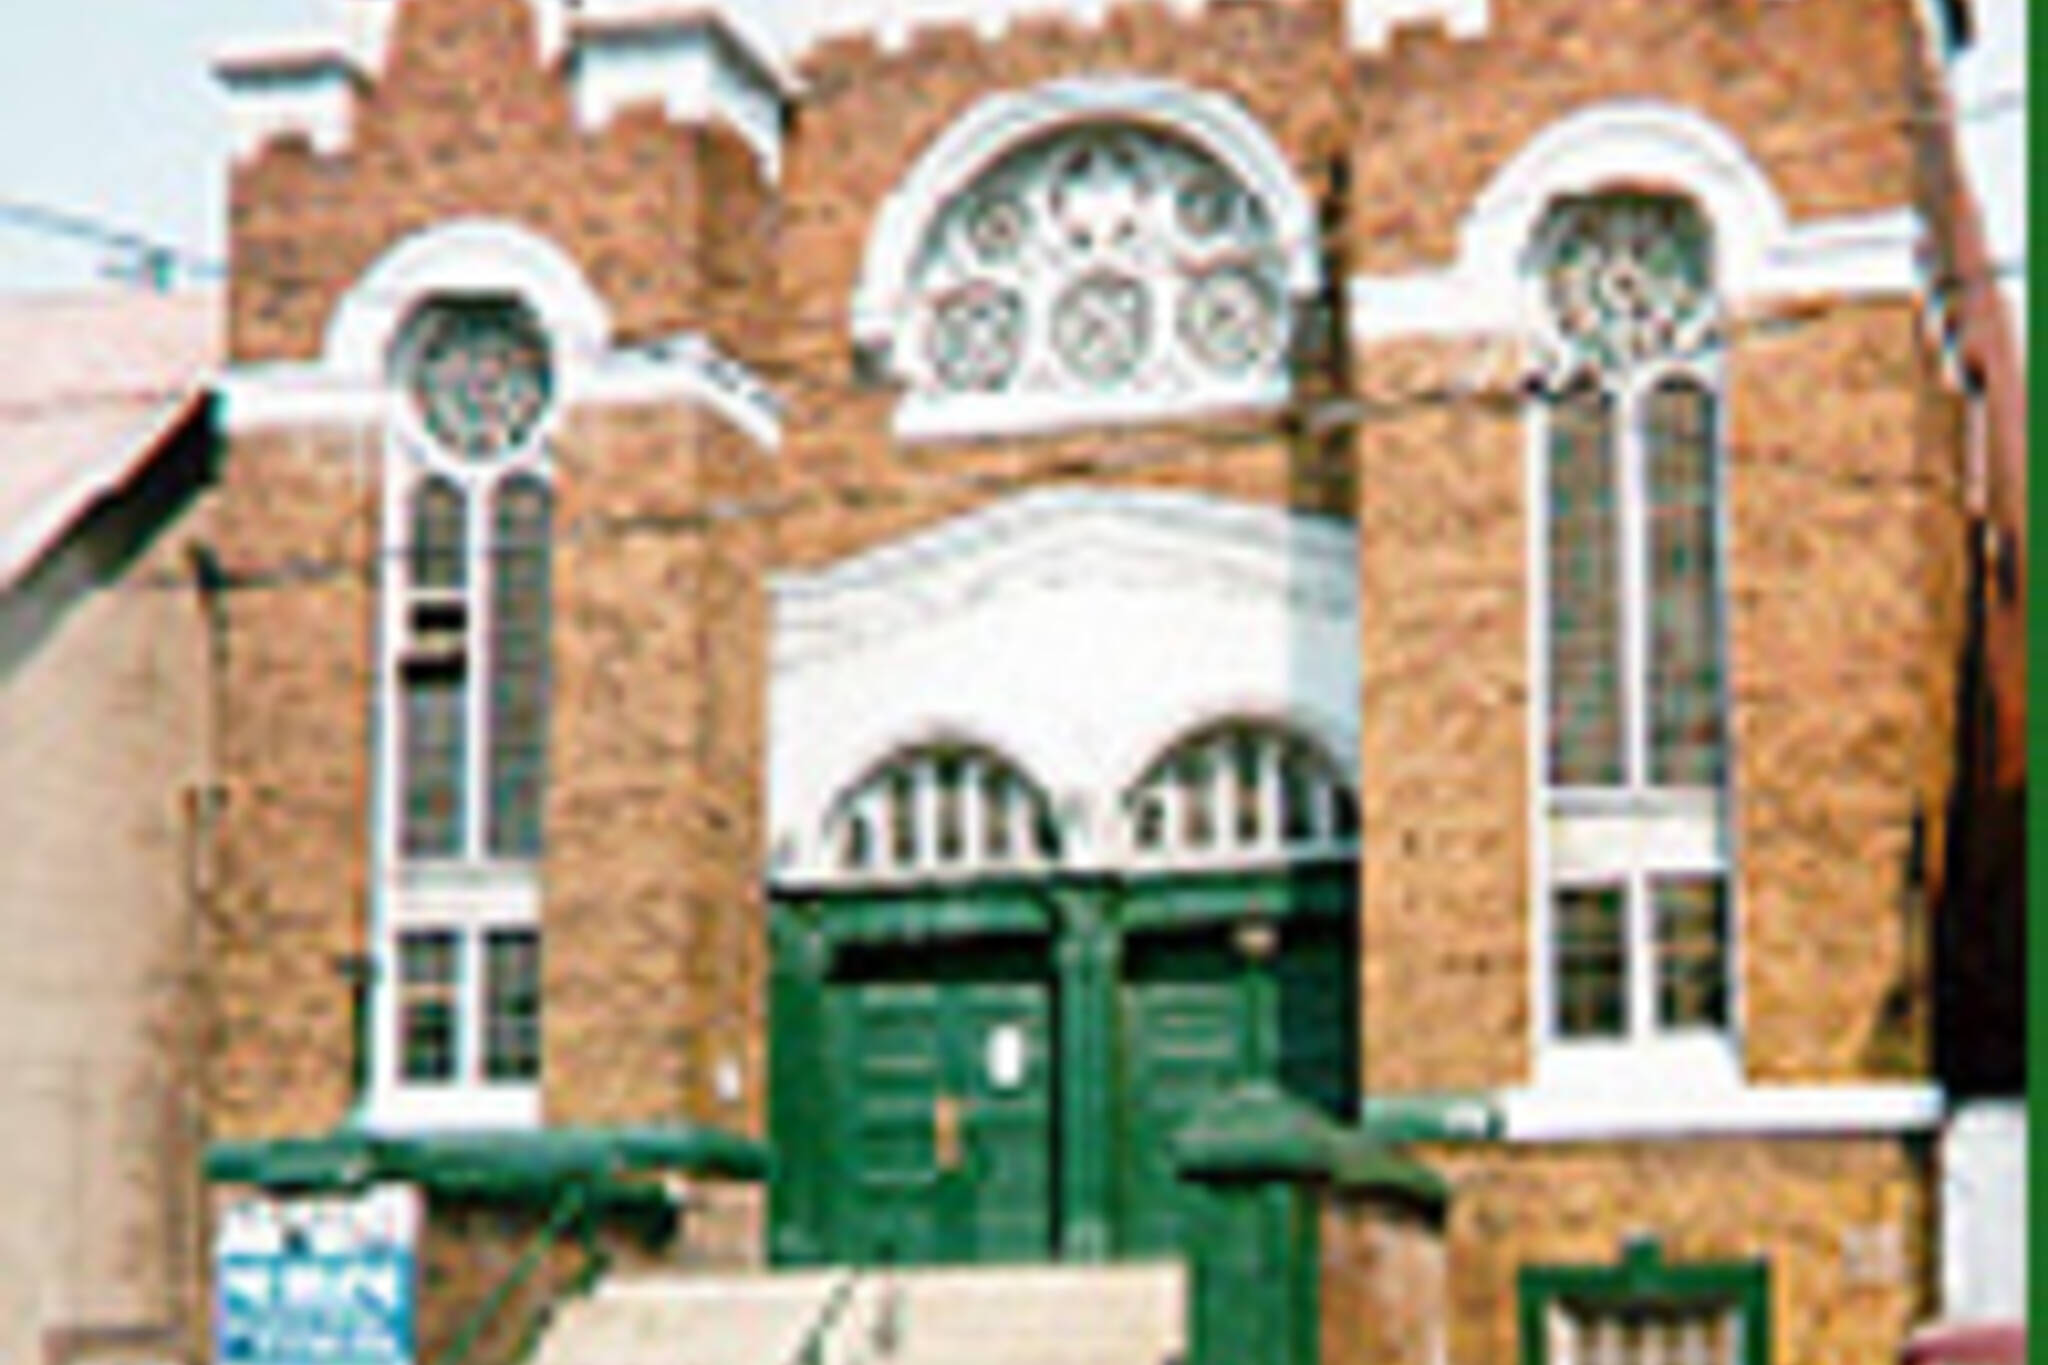 Kensington Market's historic Anshei Minsk shul.  Image from www.openair.org